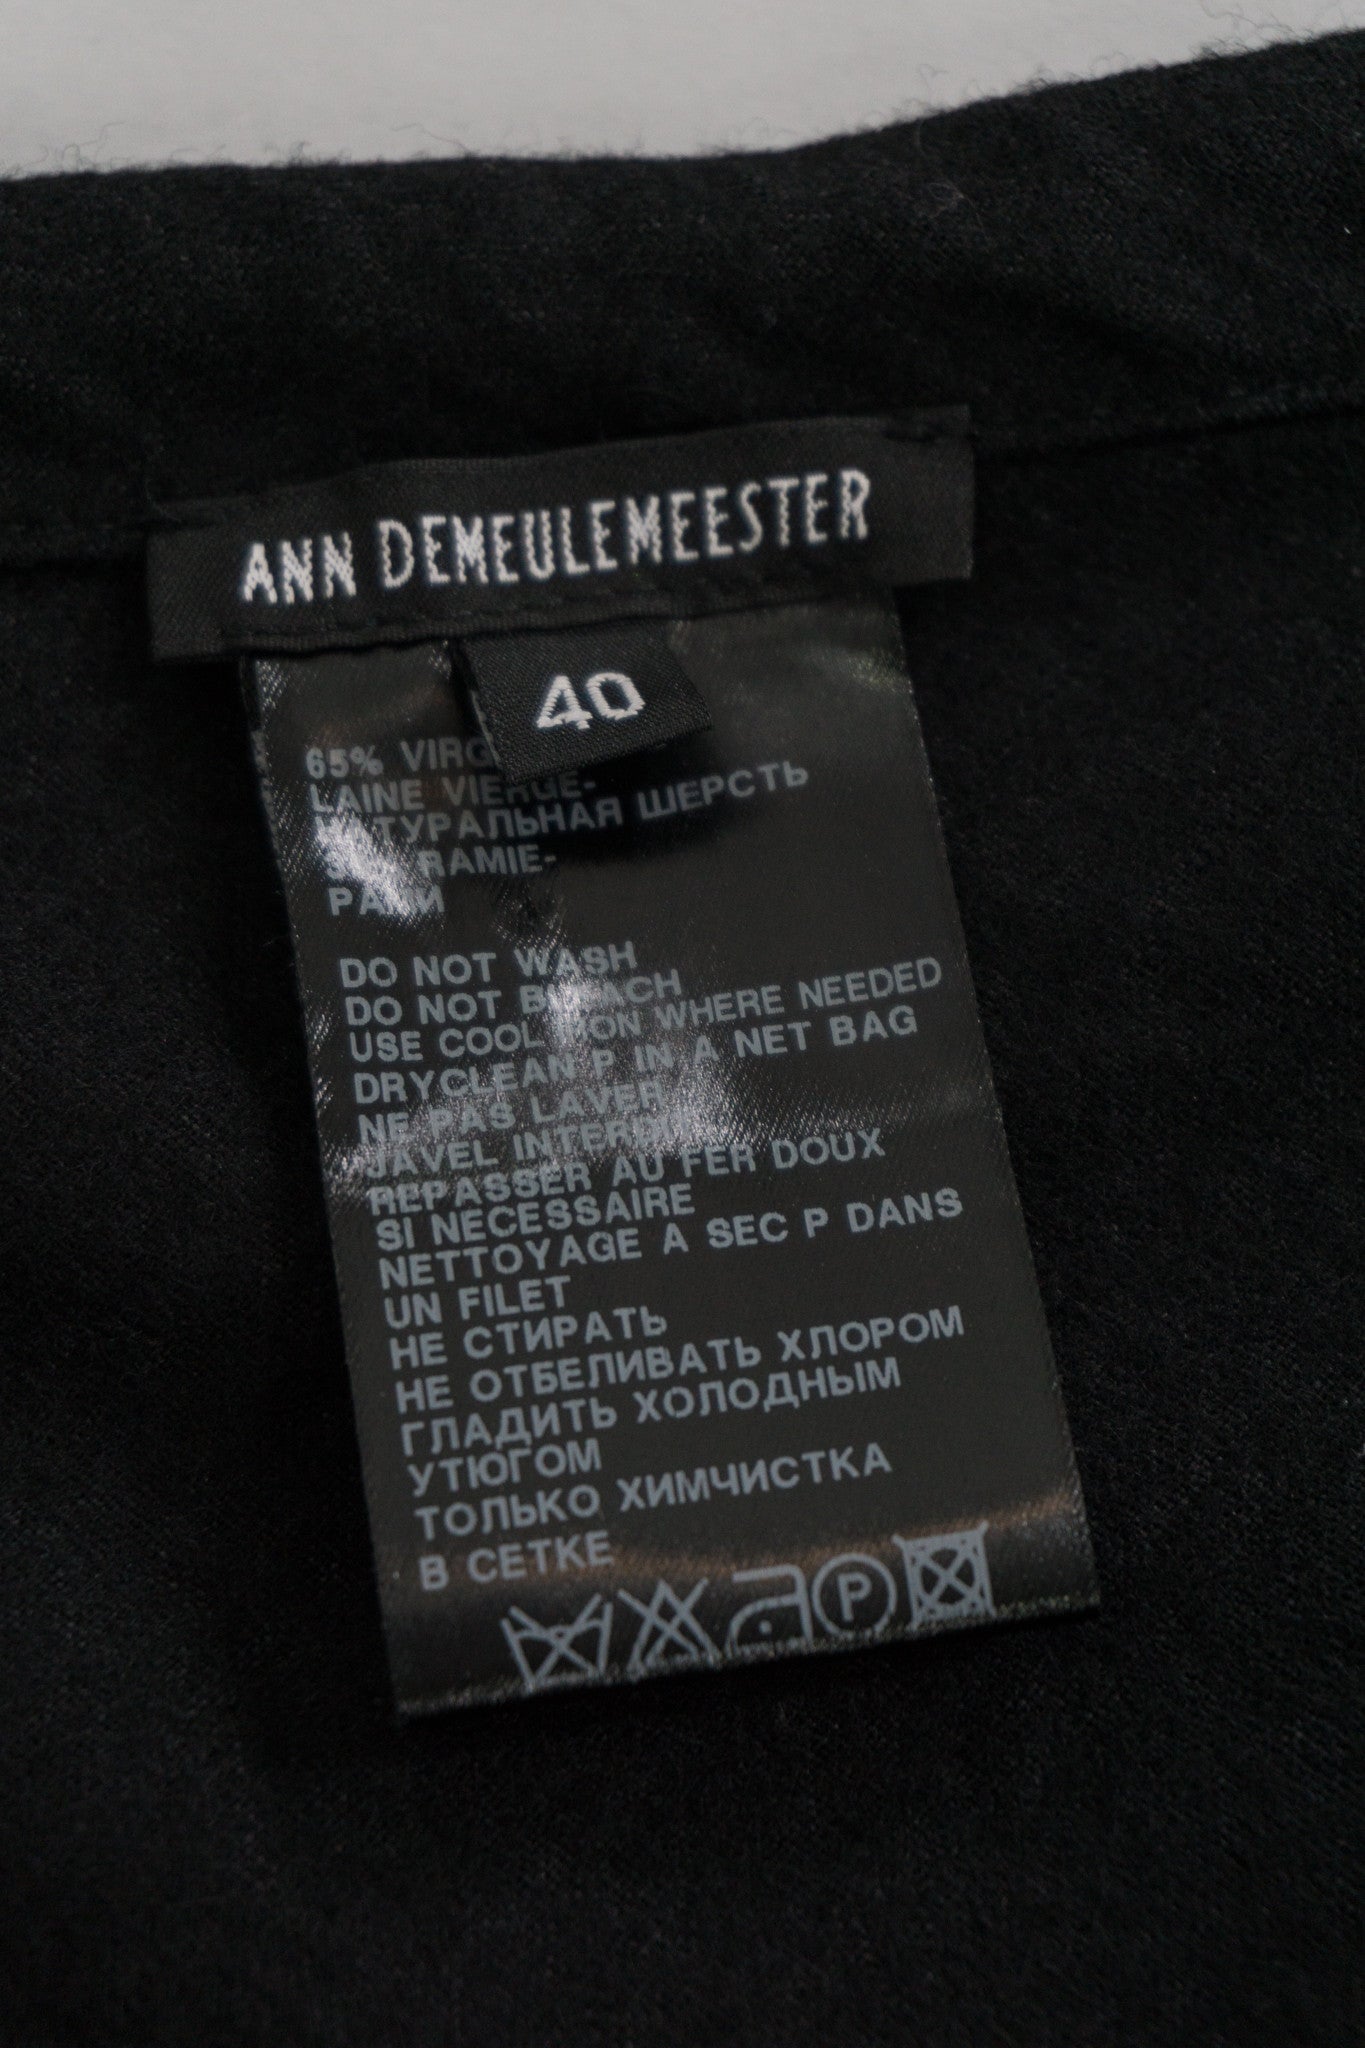 Ann Demeulemeester Label